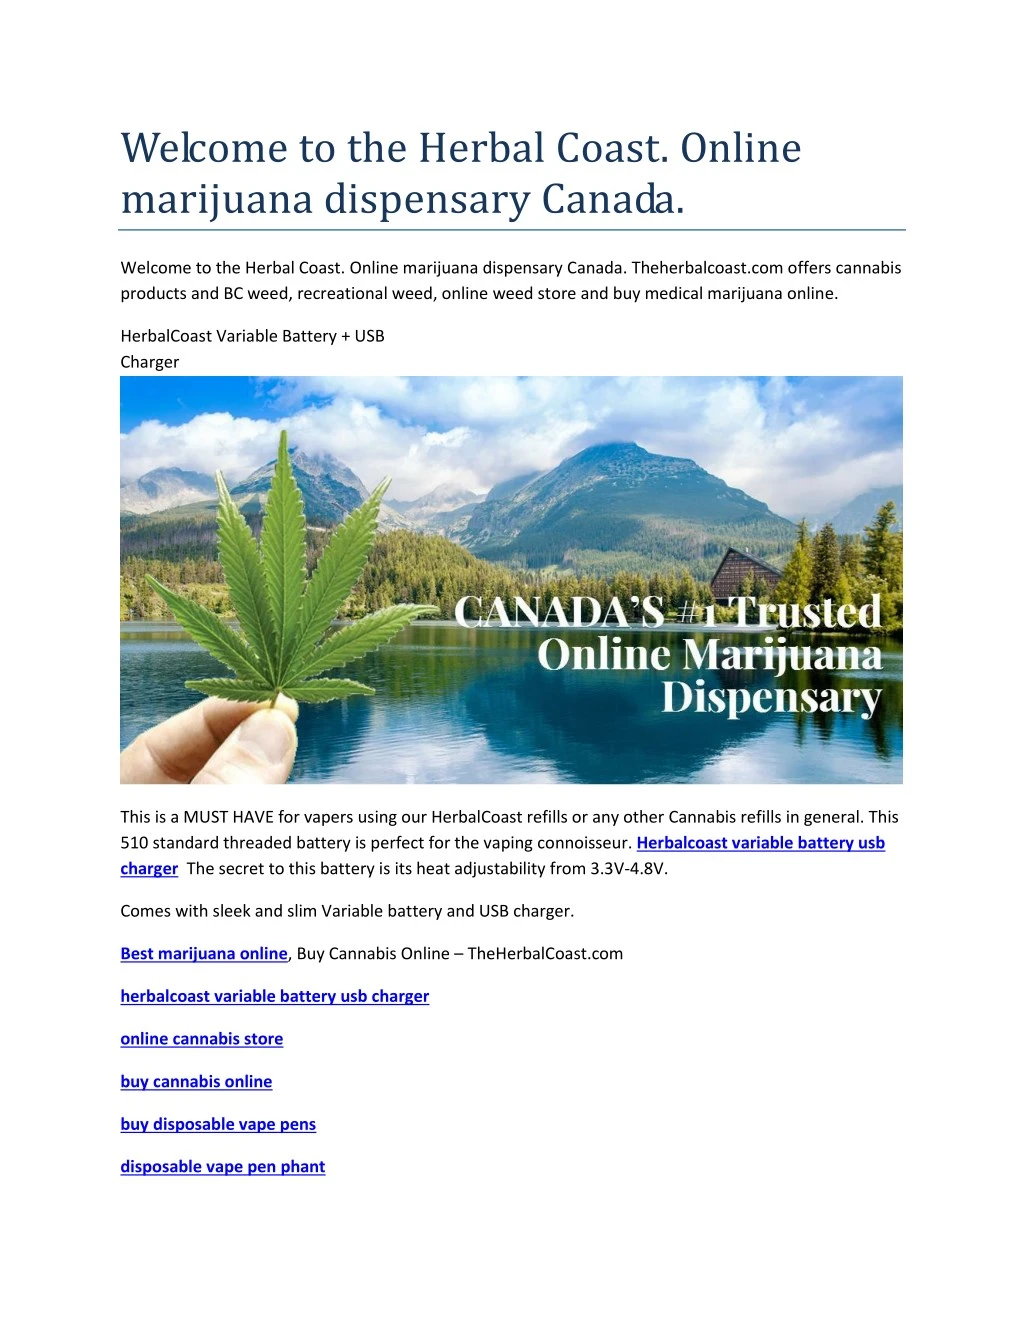 welcome to the herbal coast online marijuana